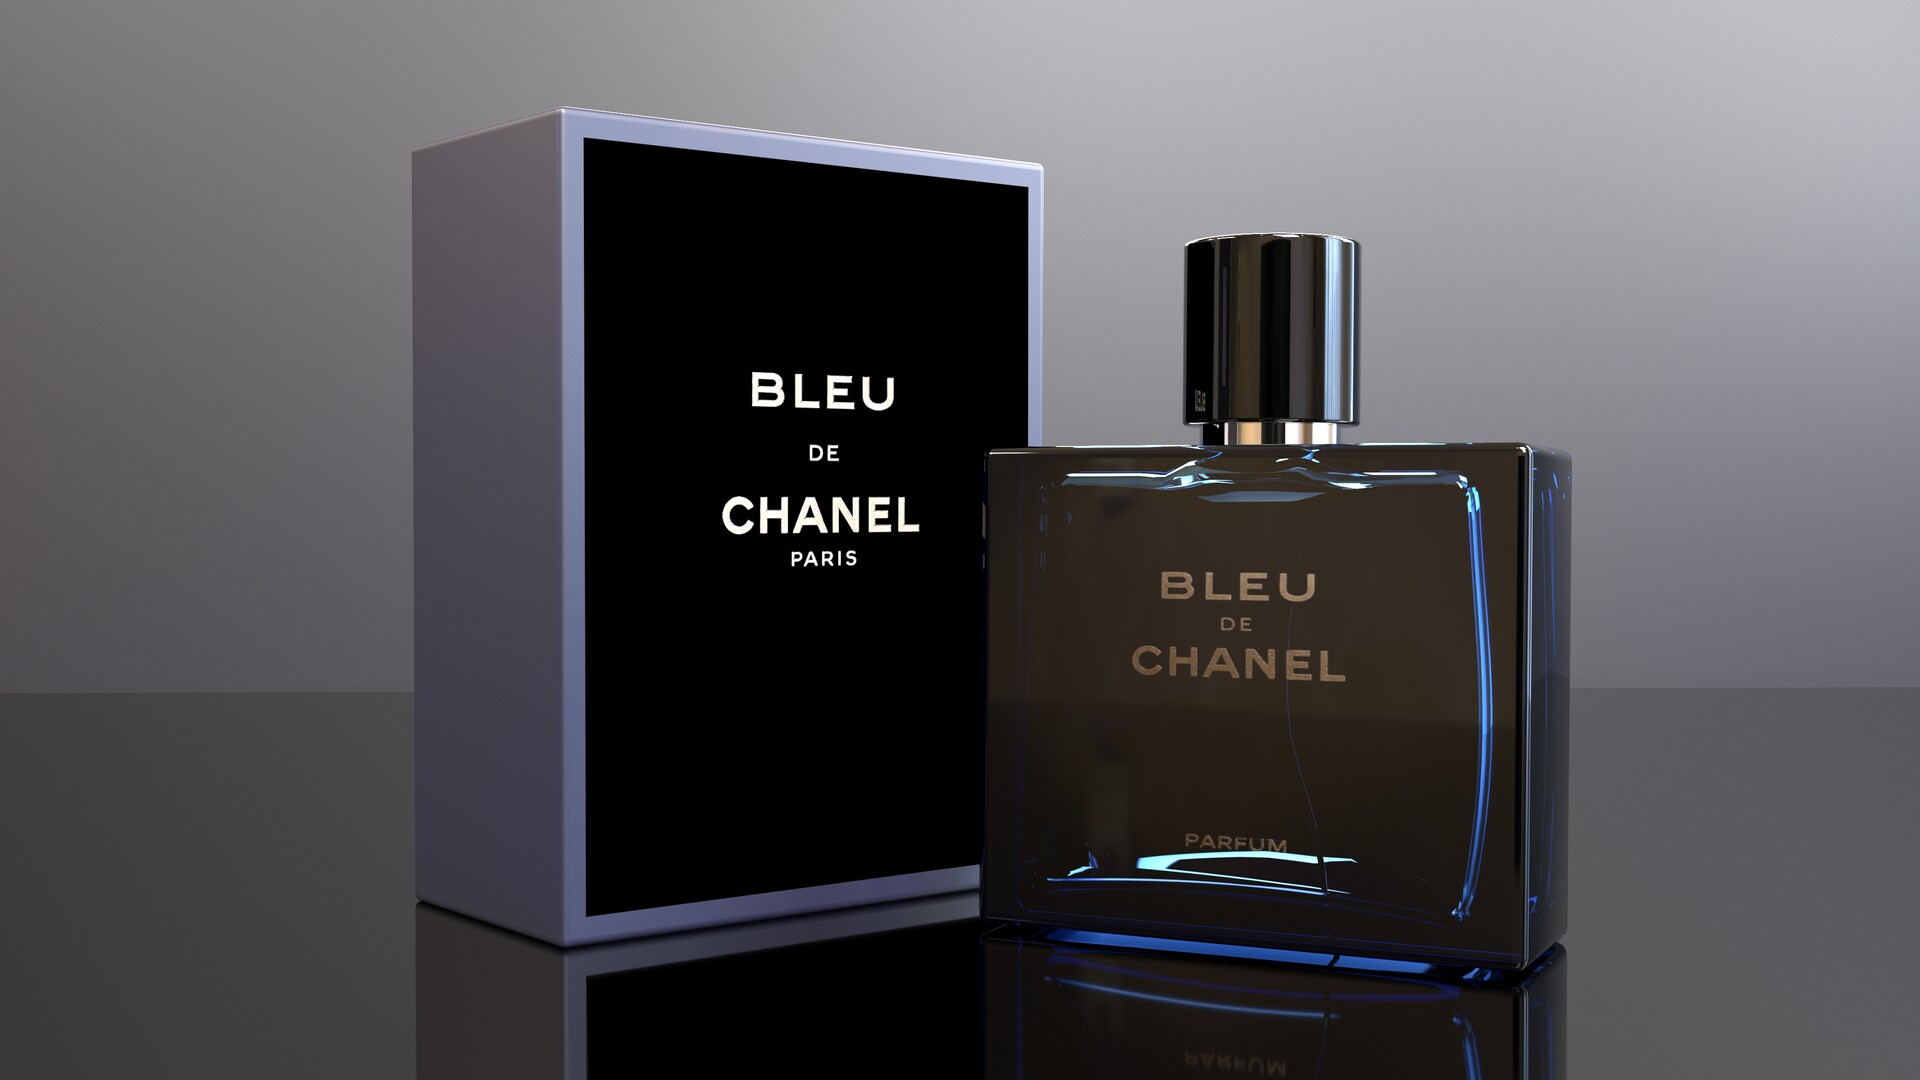 Gaspard Ulliel Bleu de Chanel Cologne Celebrity SCENTsation